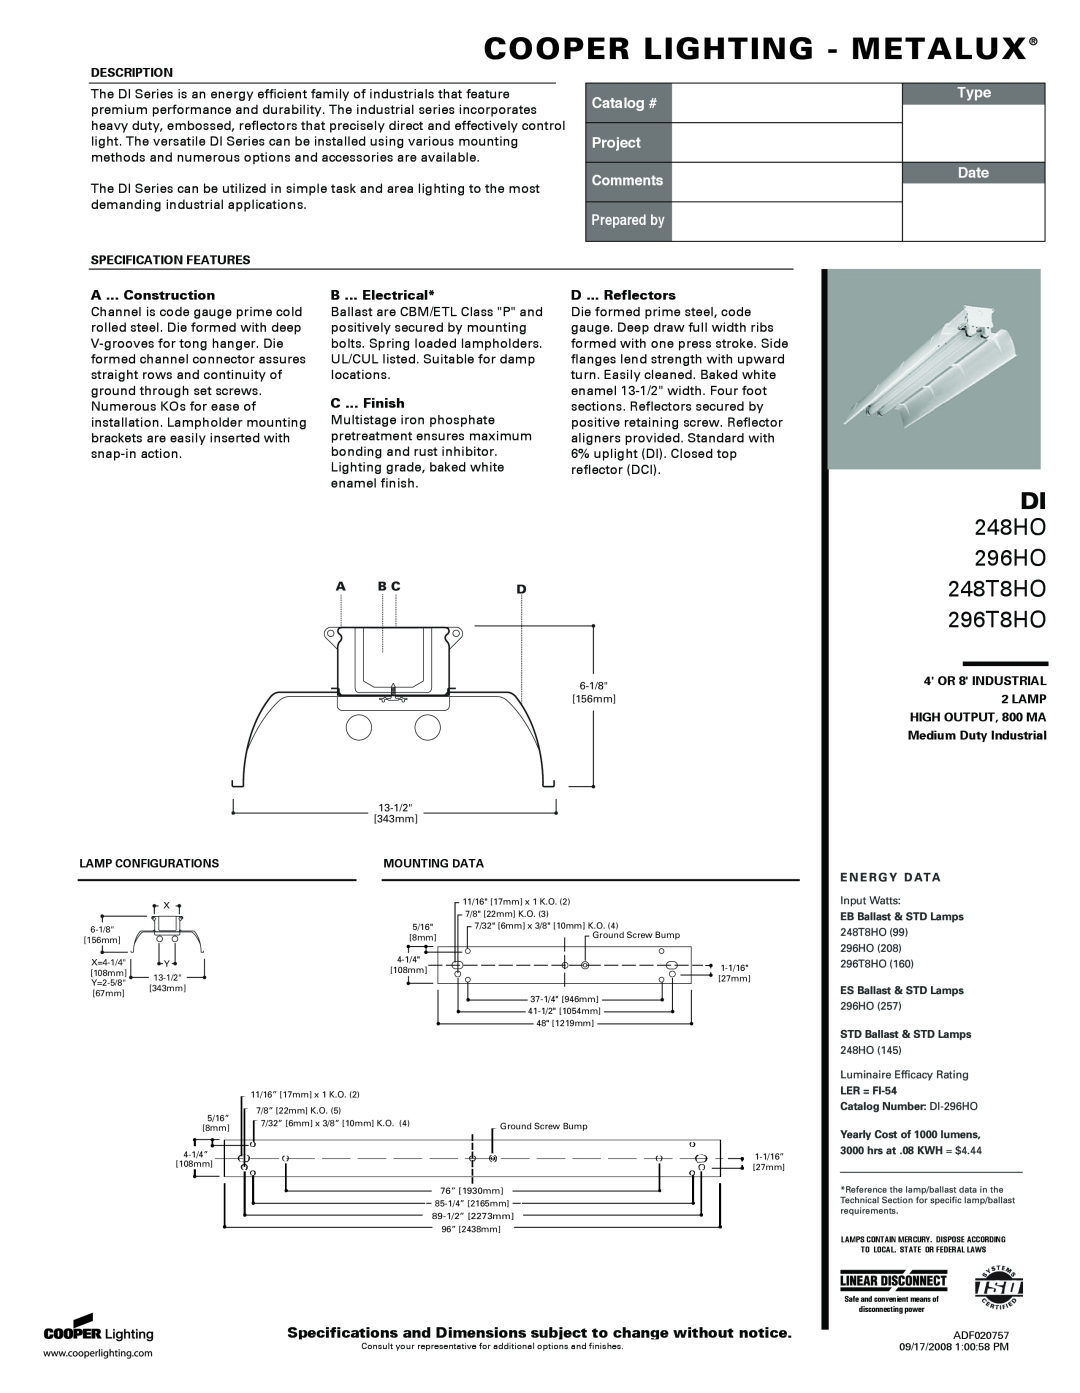 Cooper Lighting specifications Cooper Lighting - Metalux, DI 248HO, 296HO, 248T8HO 296T8HO, Catalog #, Project Comments 